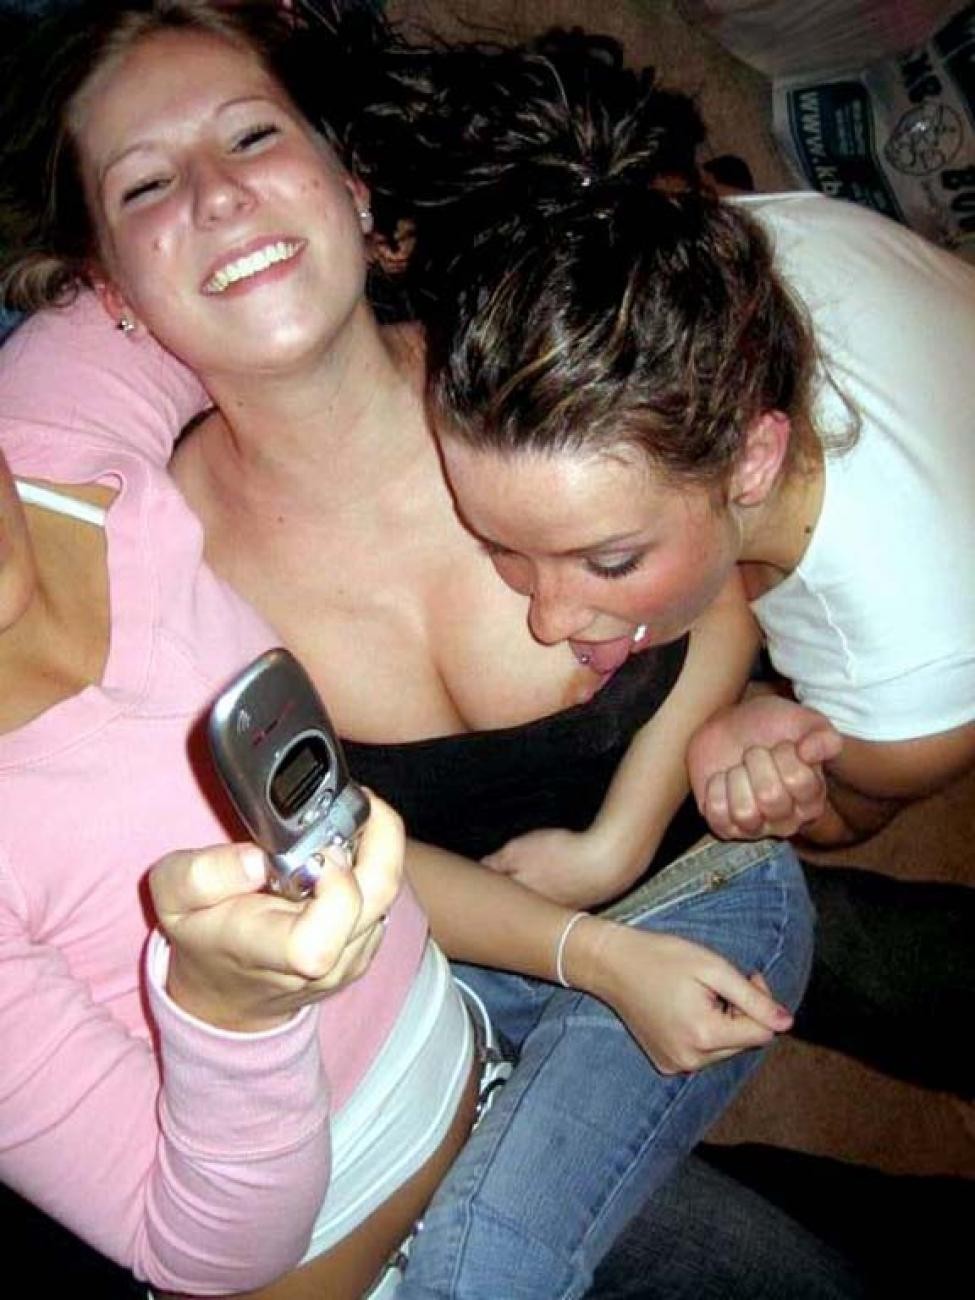 Hot pics of drunk teens naked and having fun #77129764